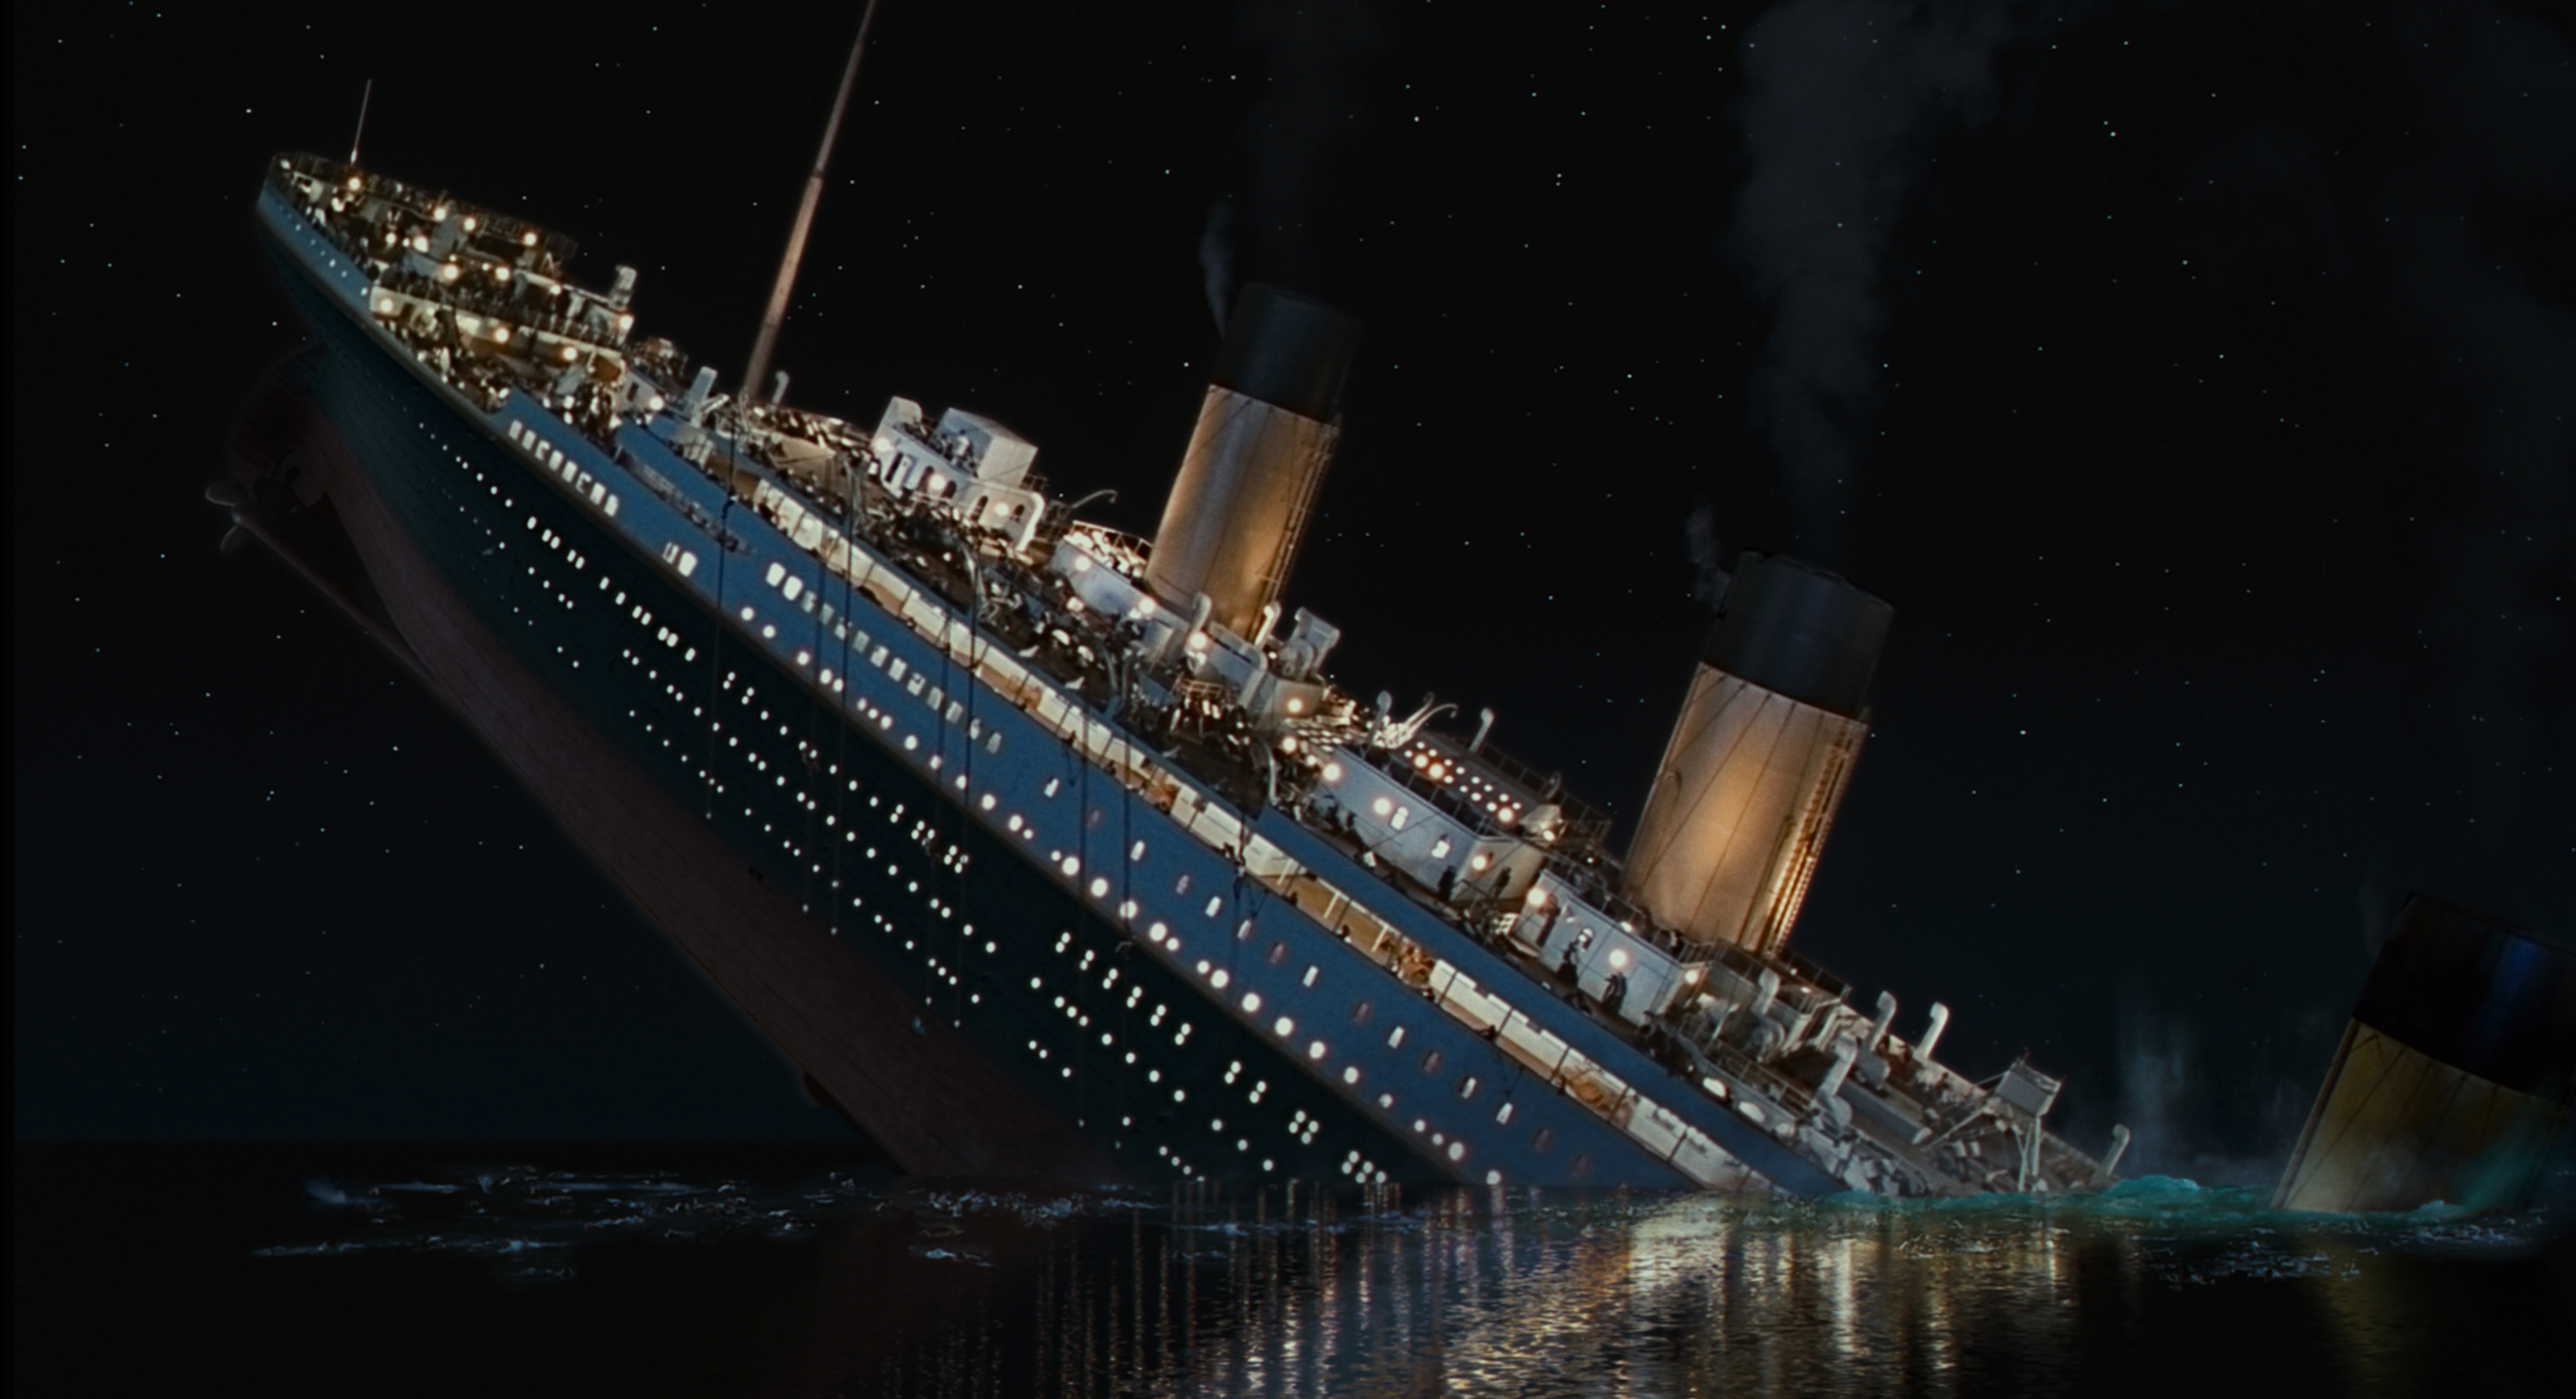 Titanic free